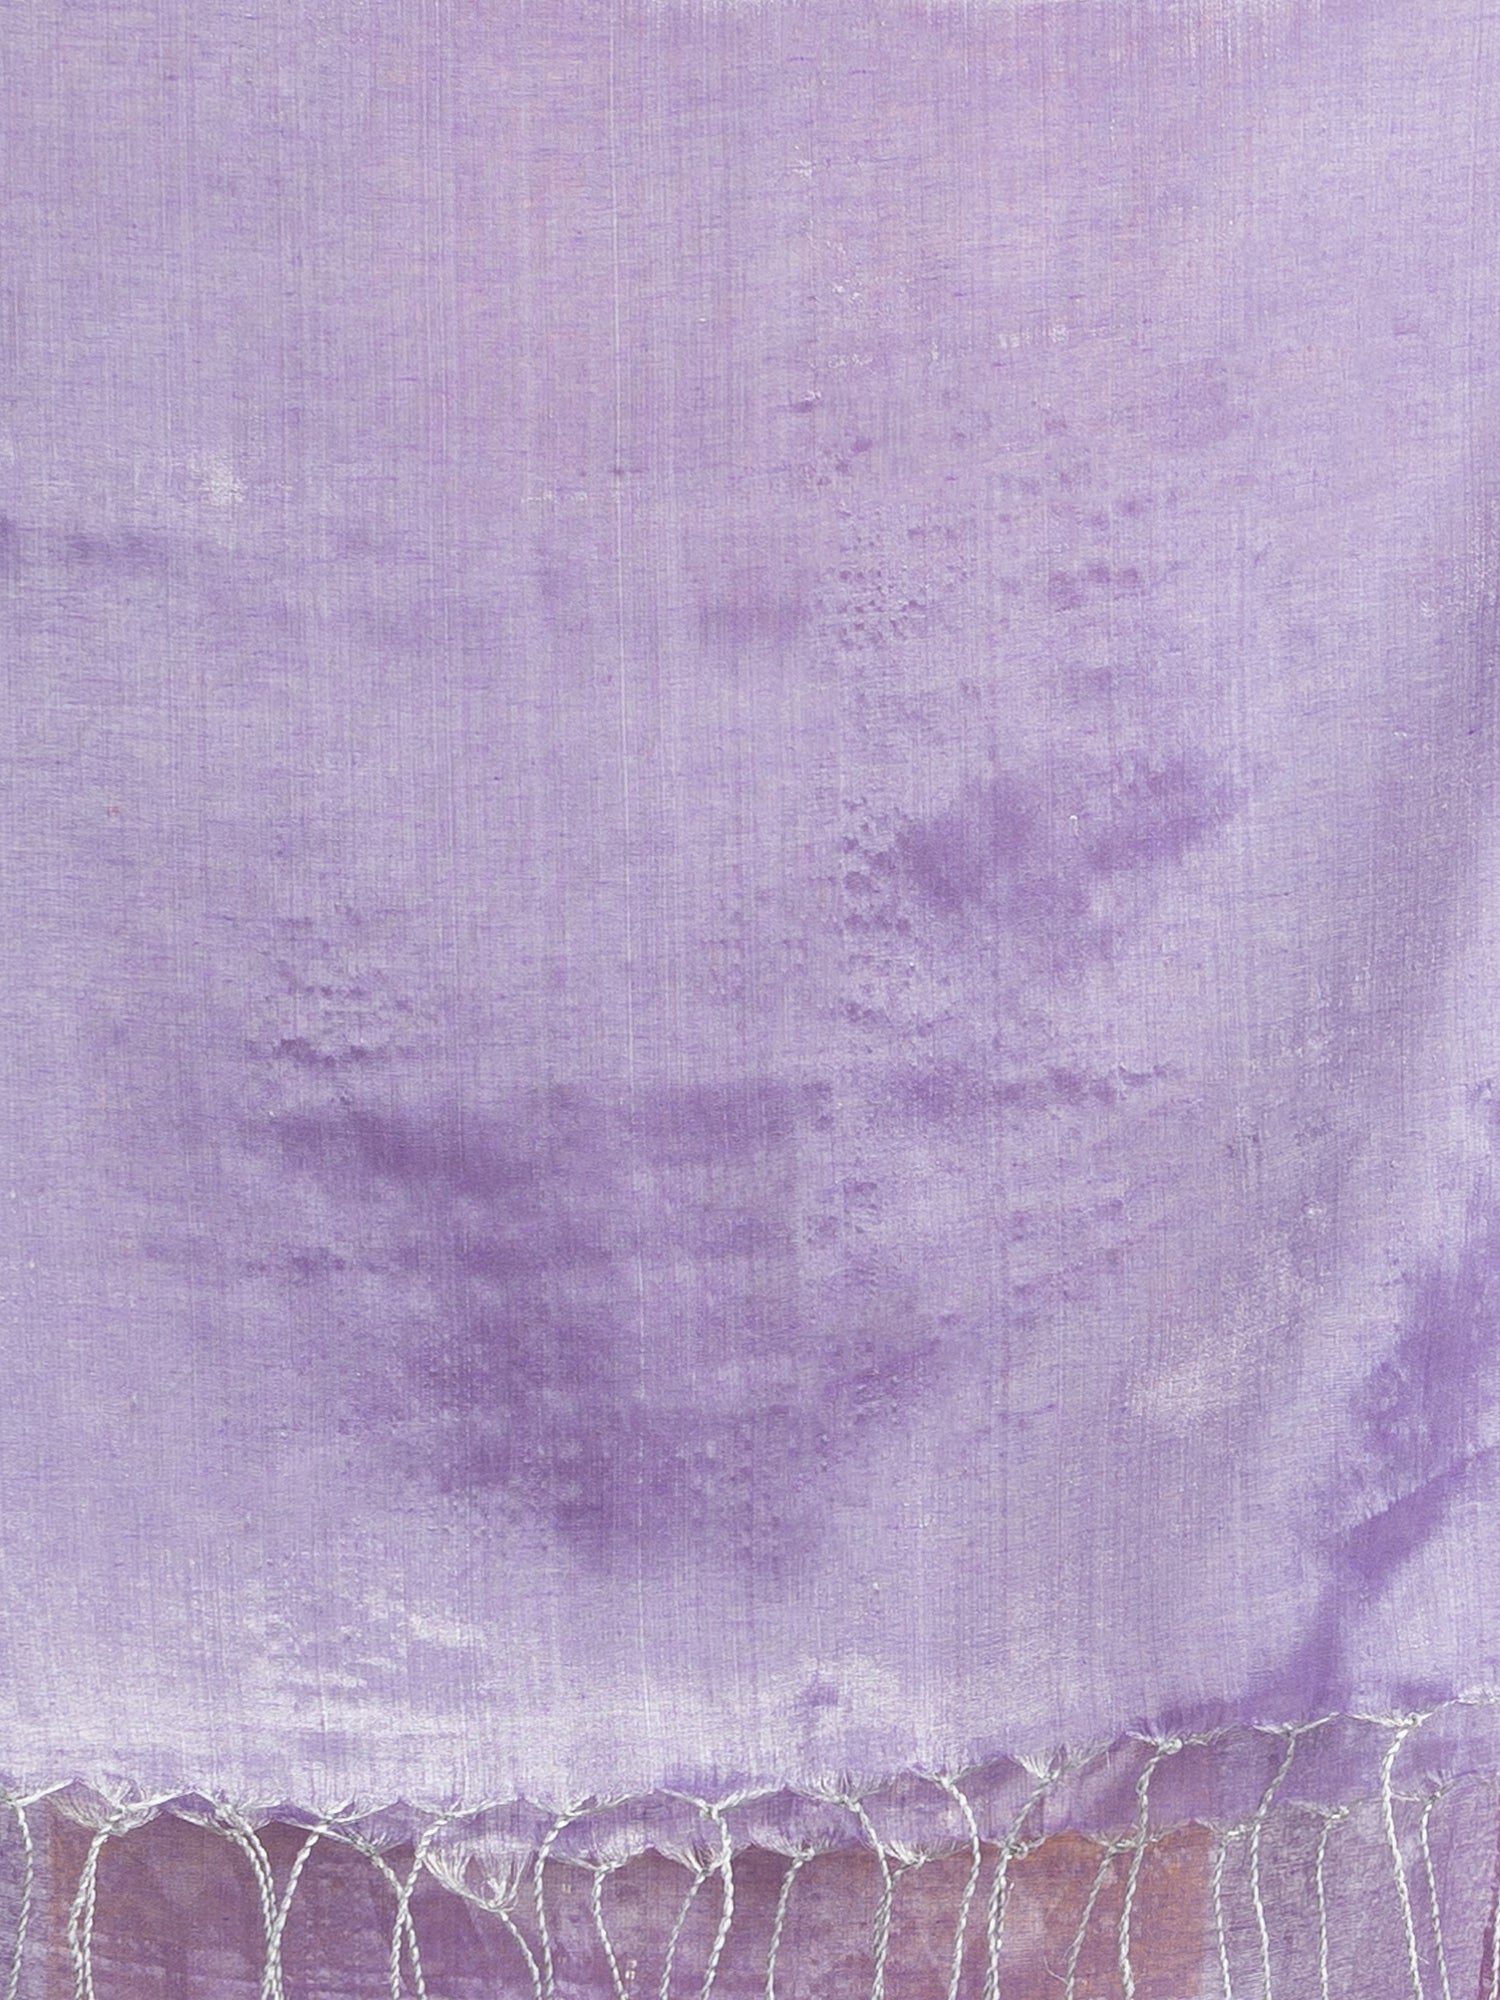 Women's Violet tissue cotton solit haif inchi border saree - Angoshobha